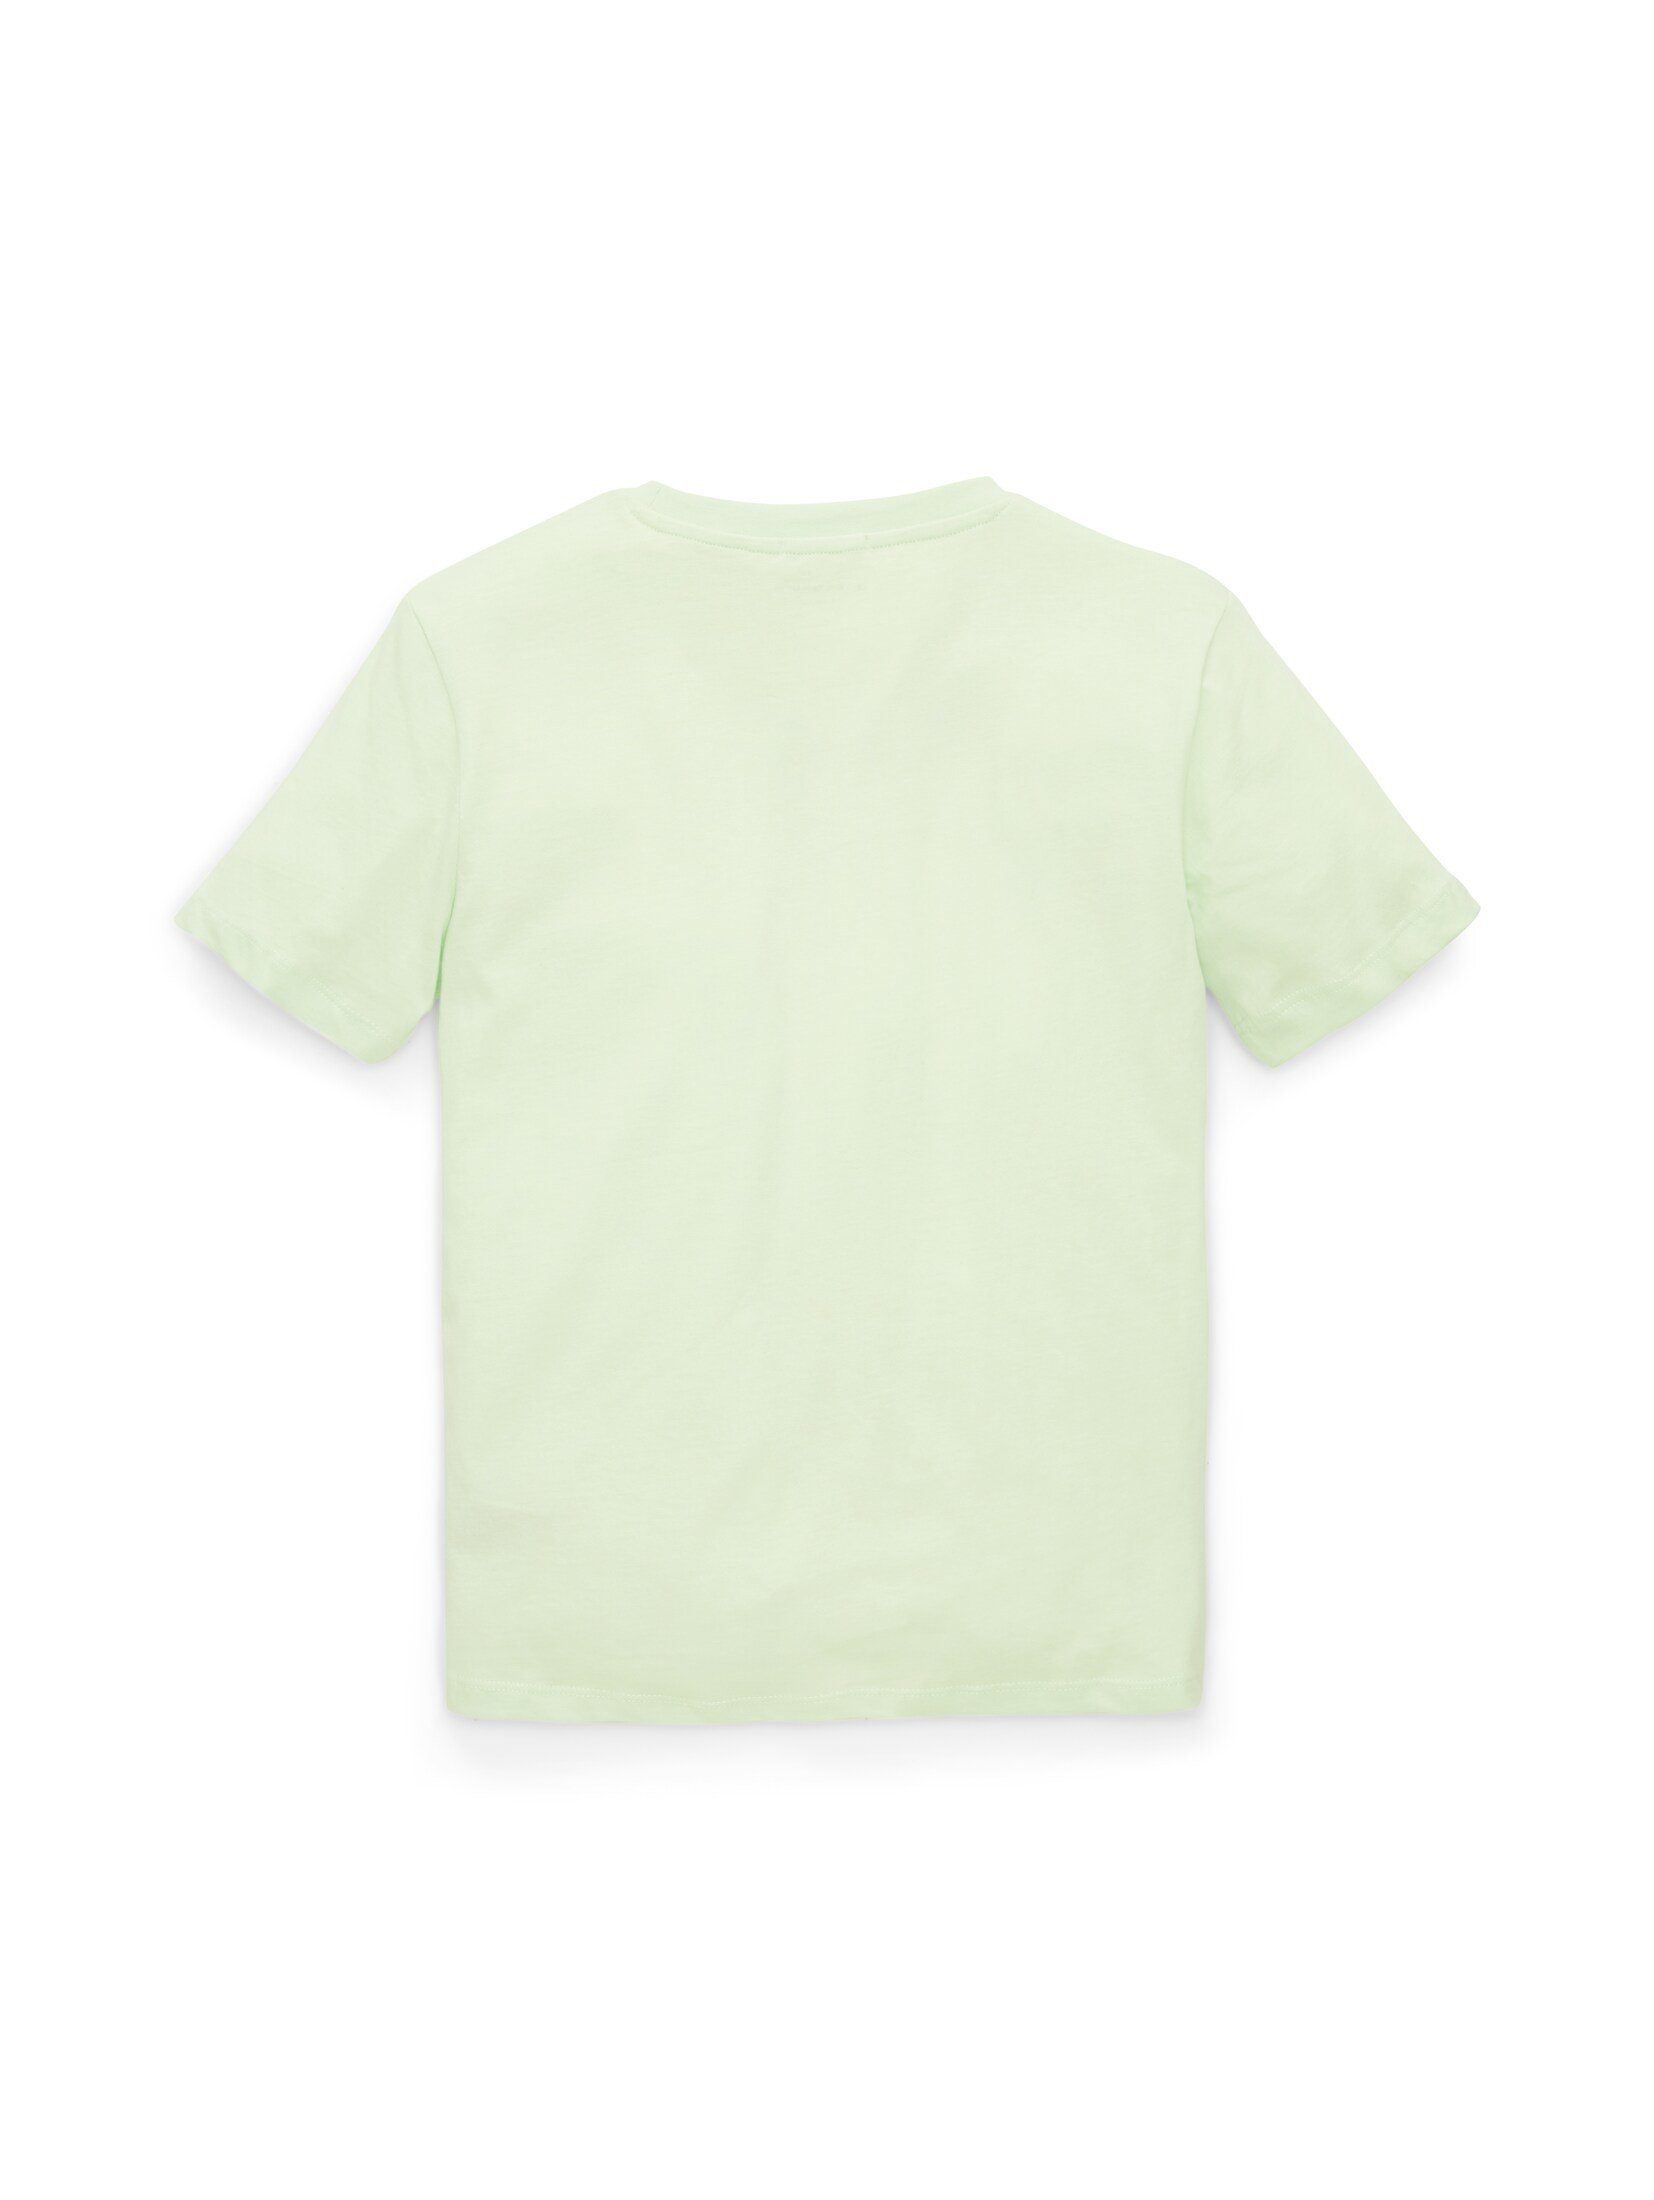 TOM TAILOR T-Shirt T-Shirt green apple Fotoprint mit fresh lime